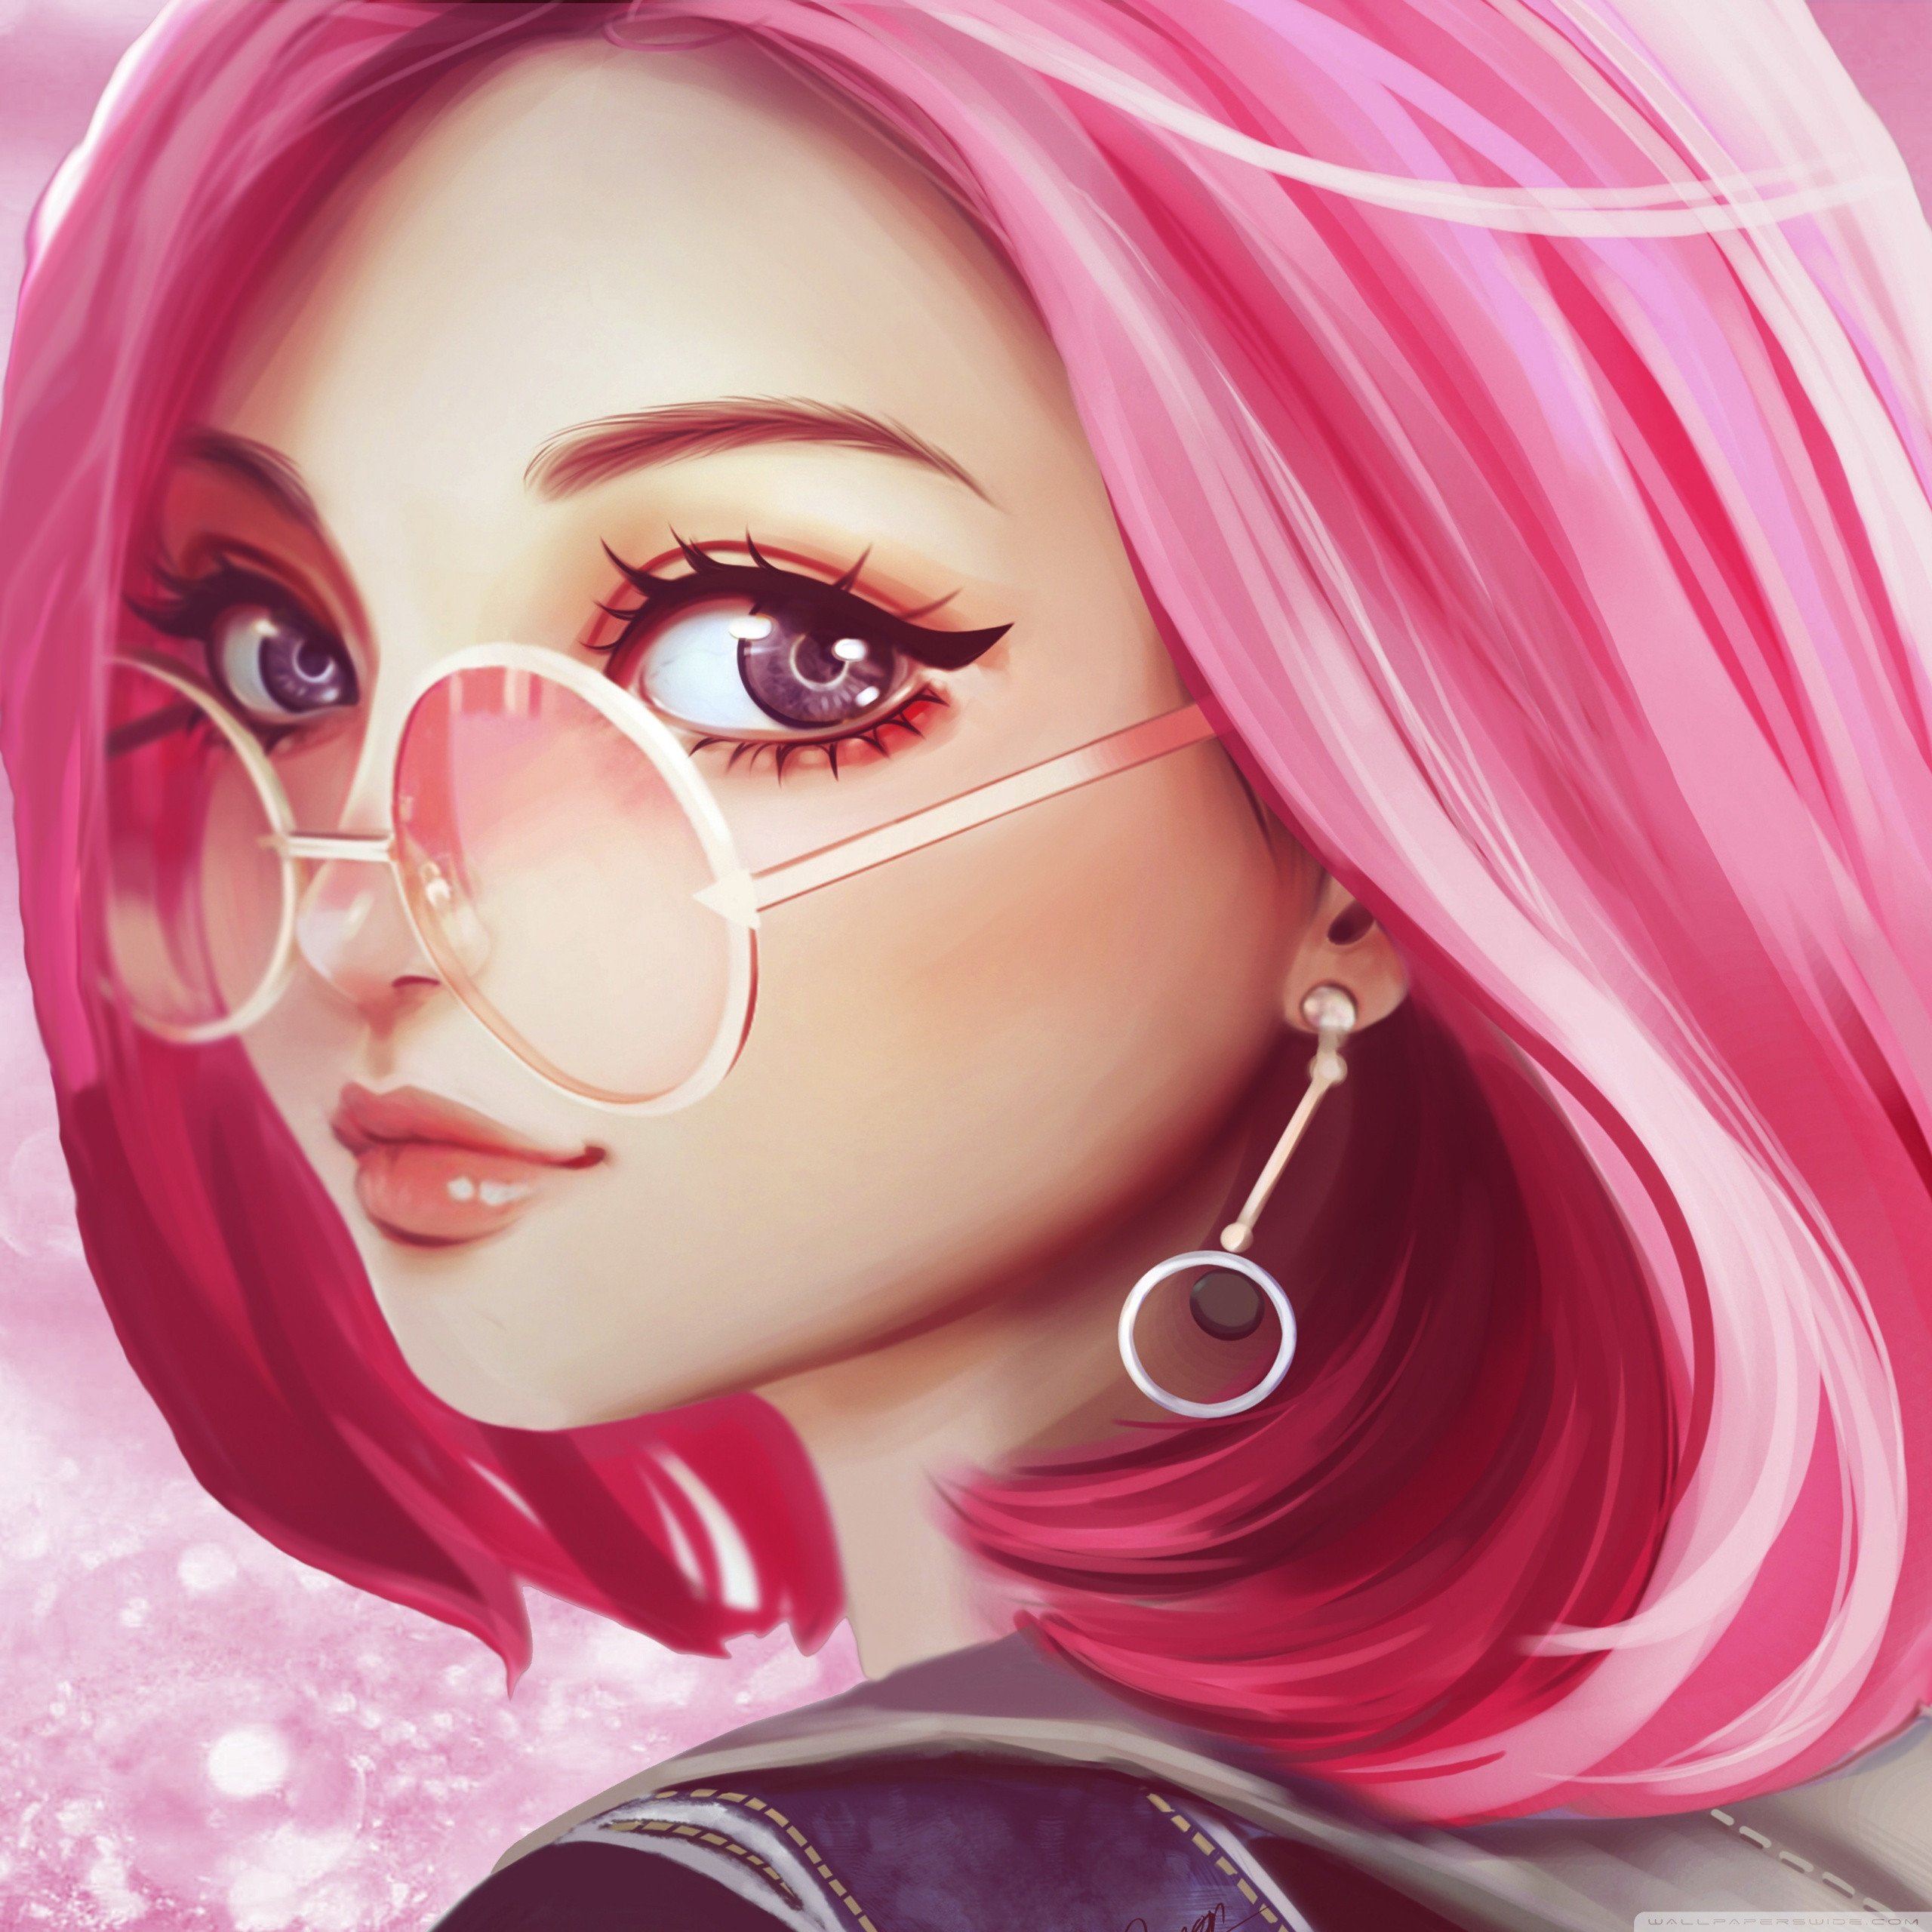 2560x2560 Tablet 1 Pink Hair Girl Art Hd Wallpaper Background Download